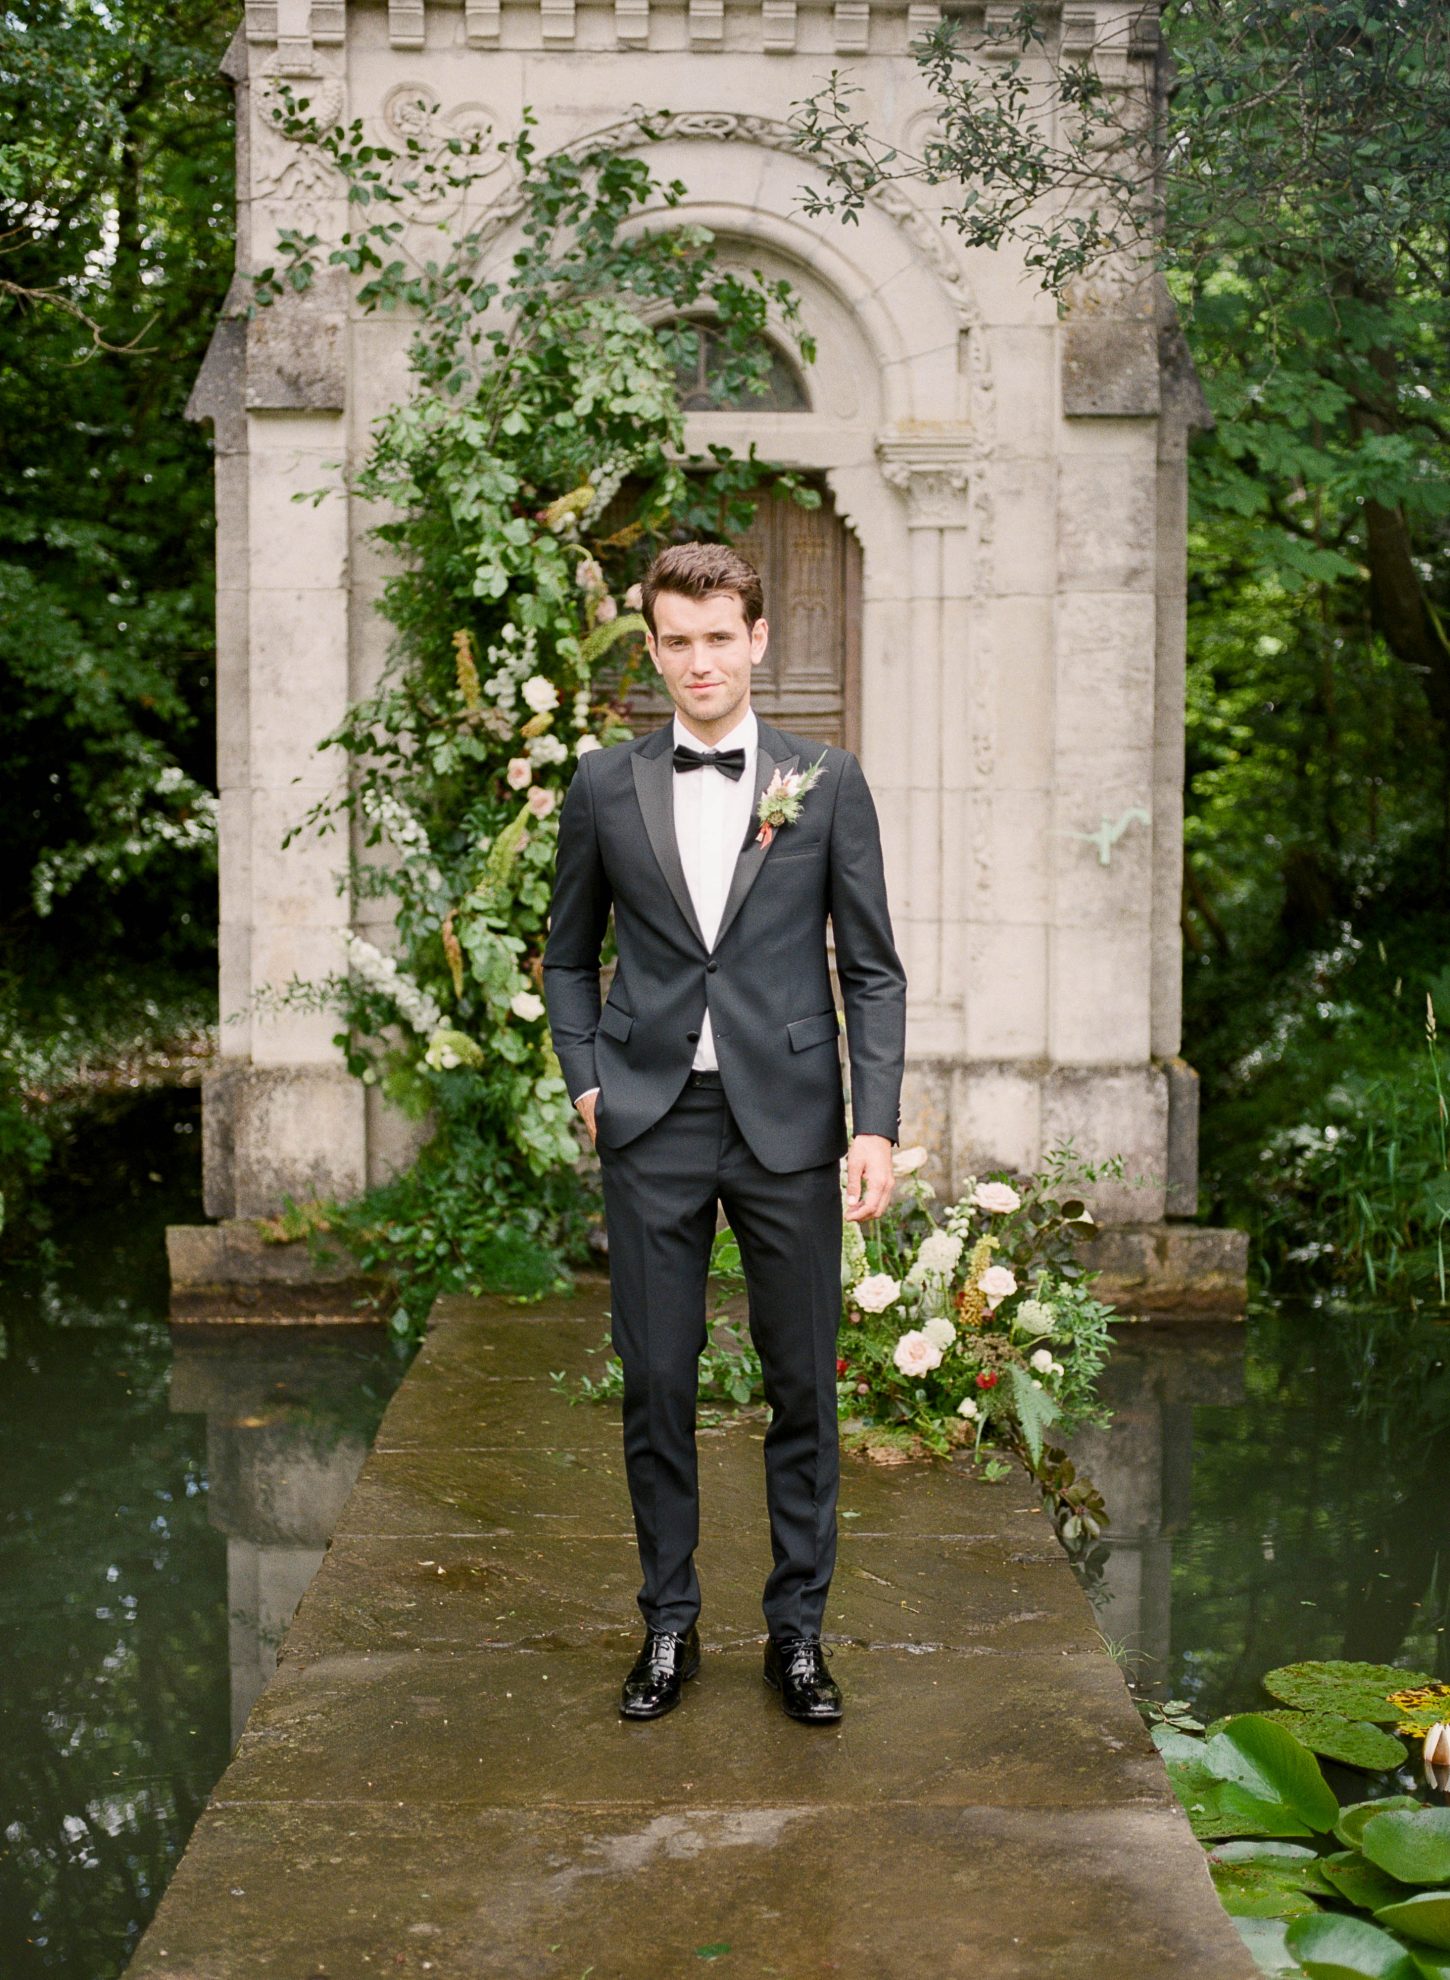 Fairytale wedding attire - groom in smart tuxedo